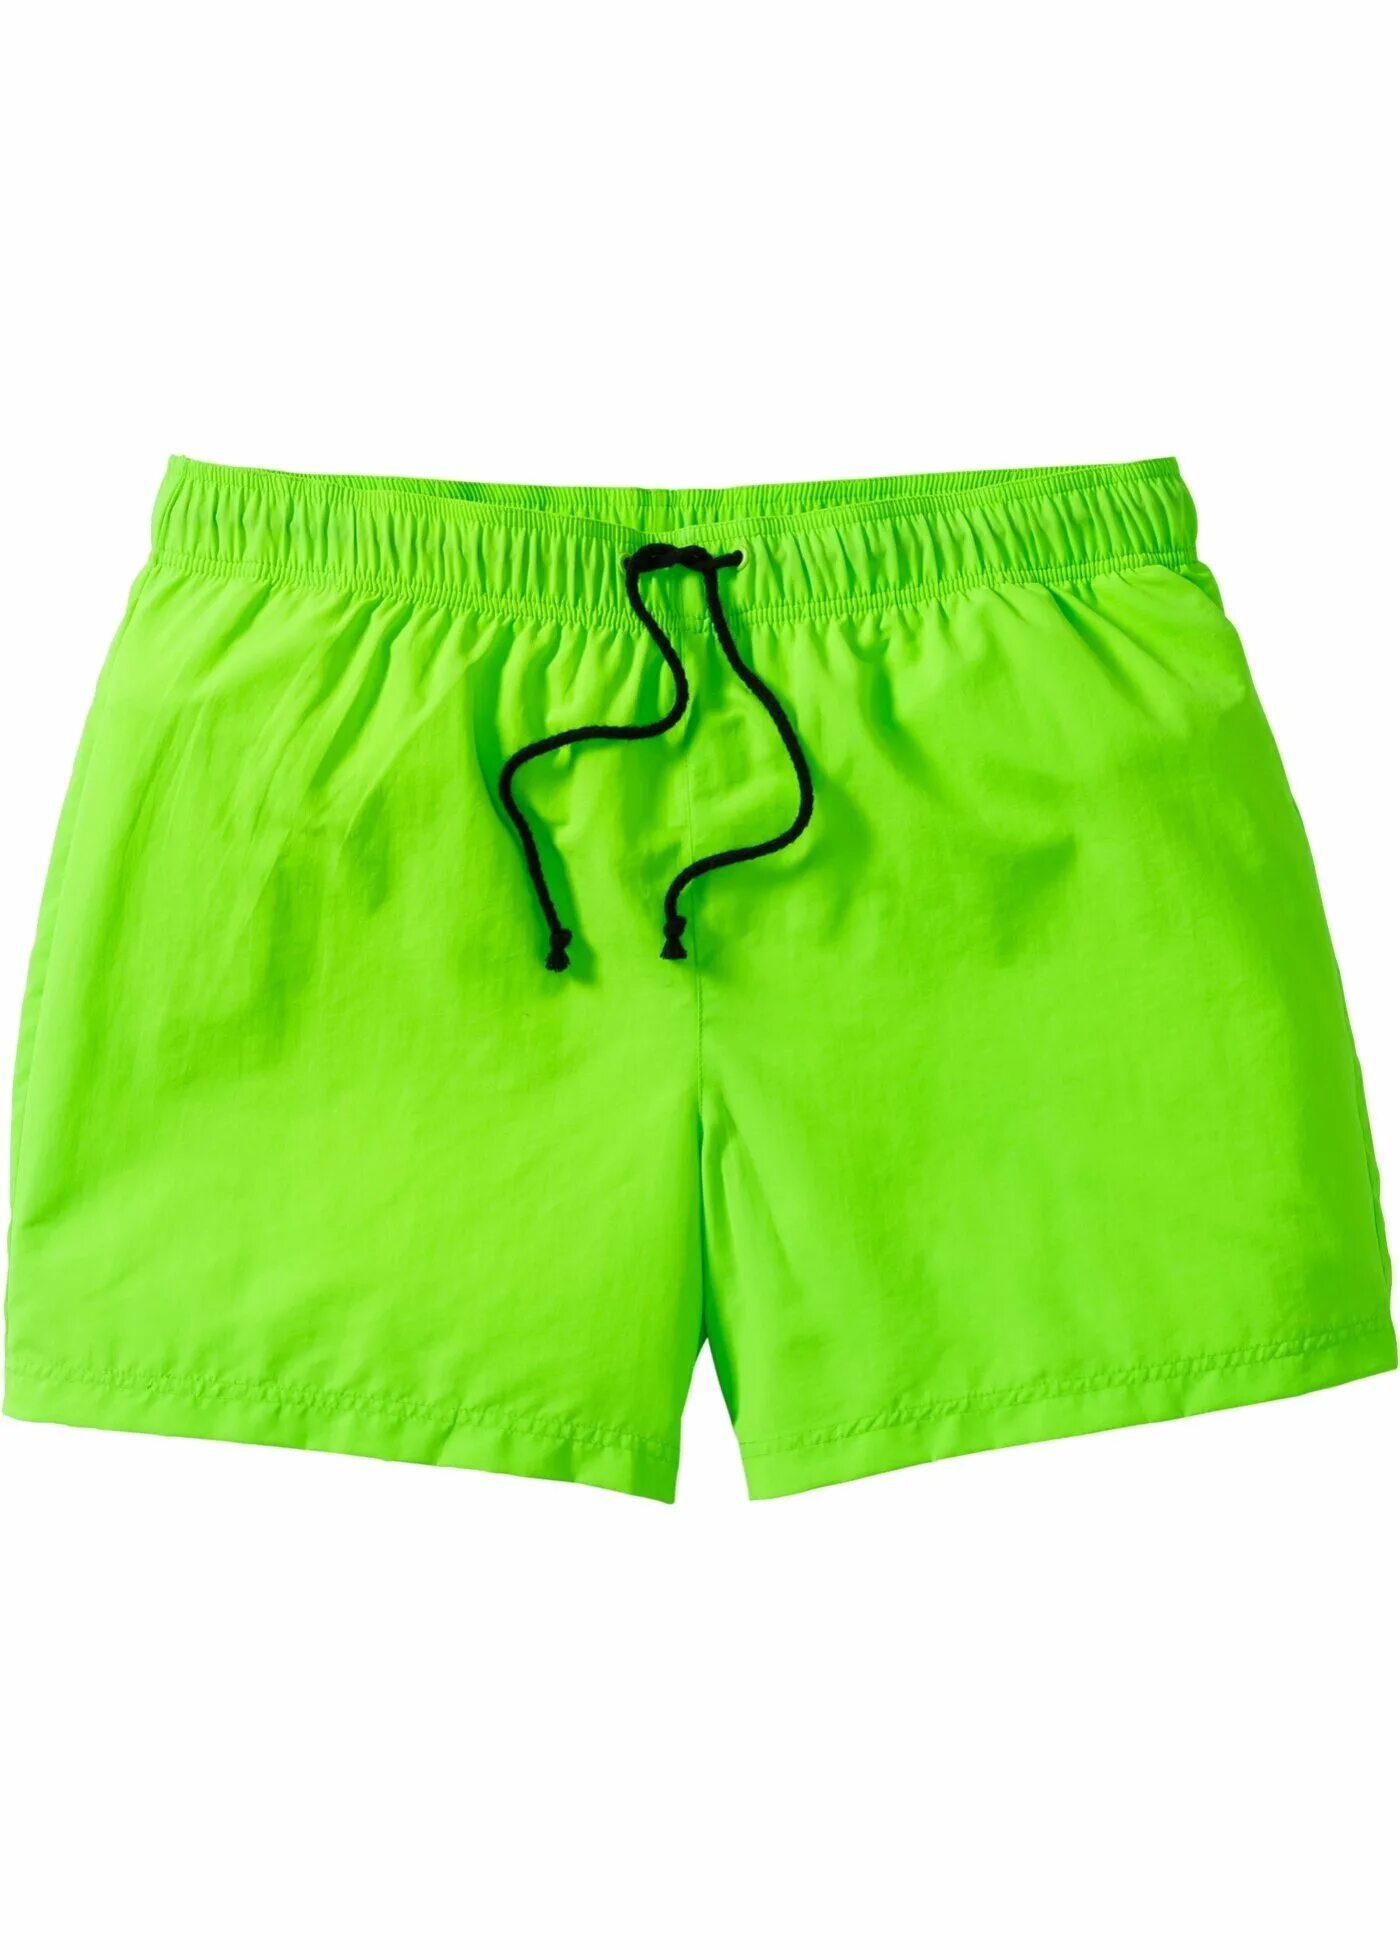 Шорты. Зелёные шорты мужские. Салатовые шорты мужские. Шорты мужские спортивные зелёные.